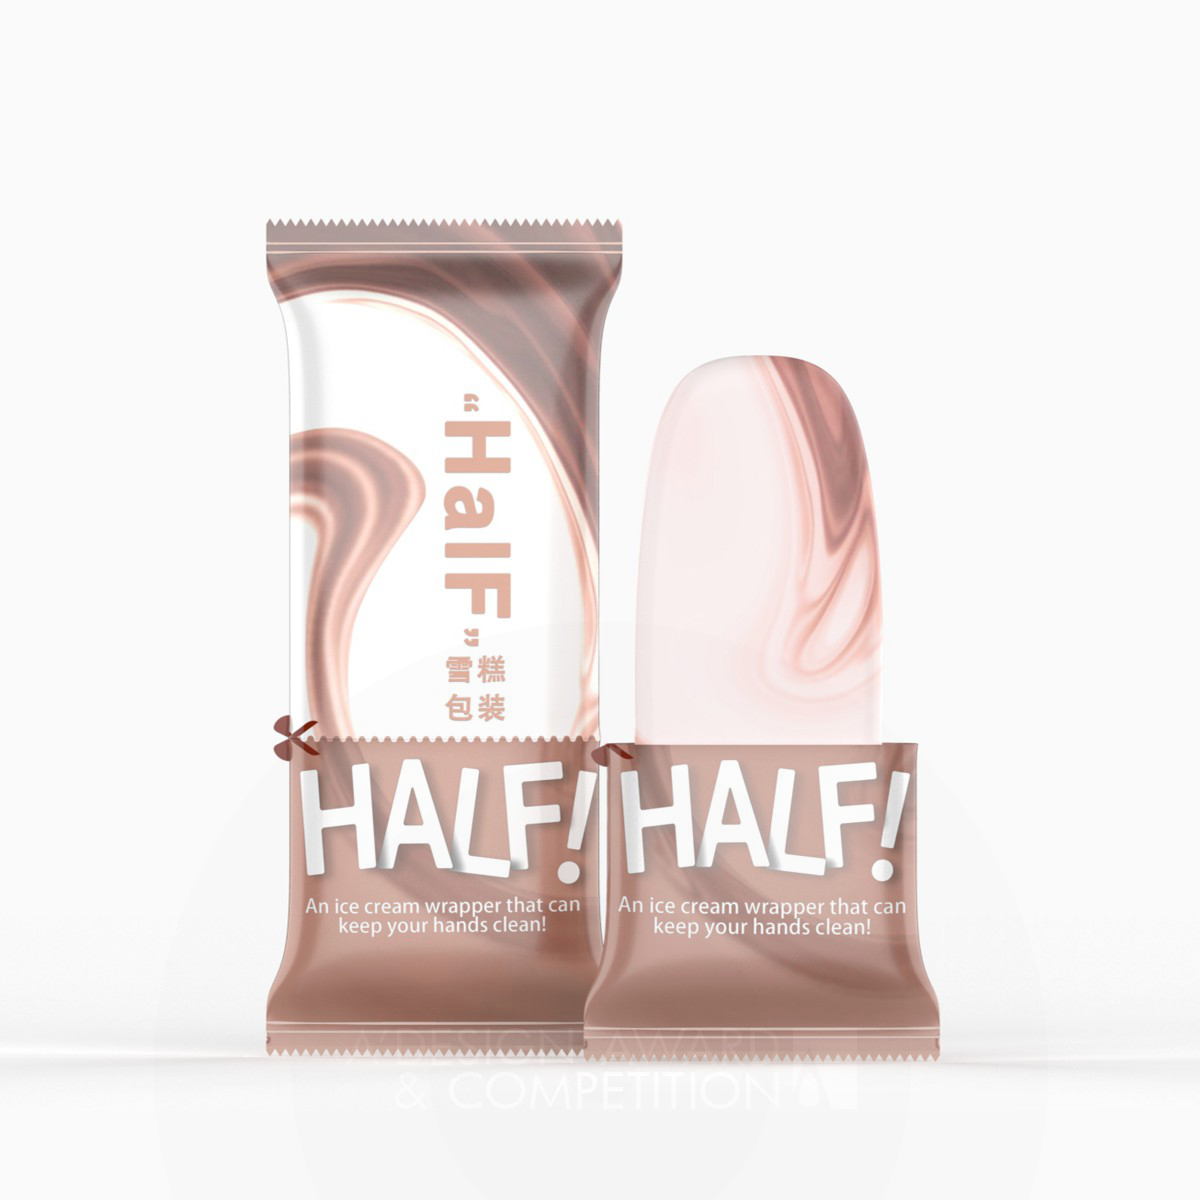 HALF Ice Cream Packing by Liu Yi Iron Packaging Design Award Winner 2019 